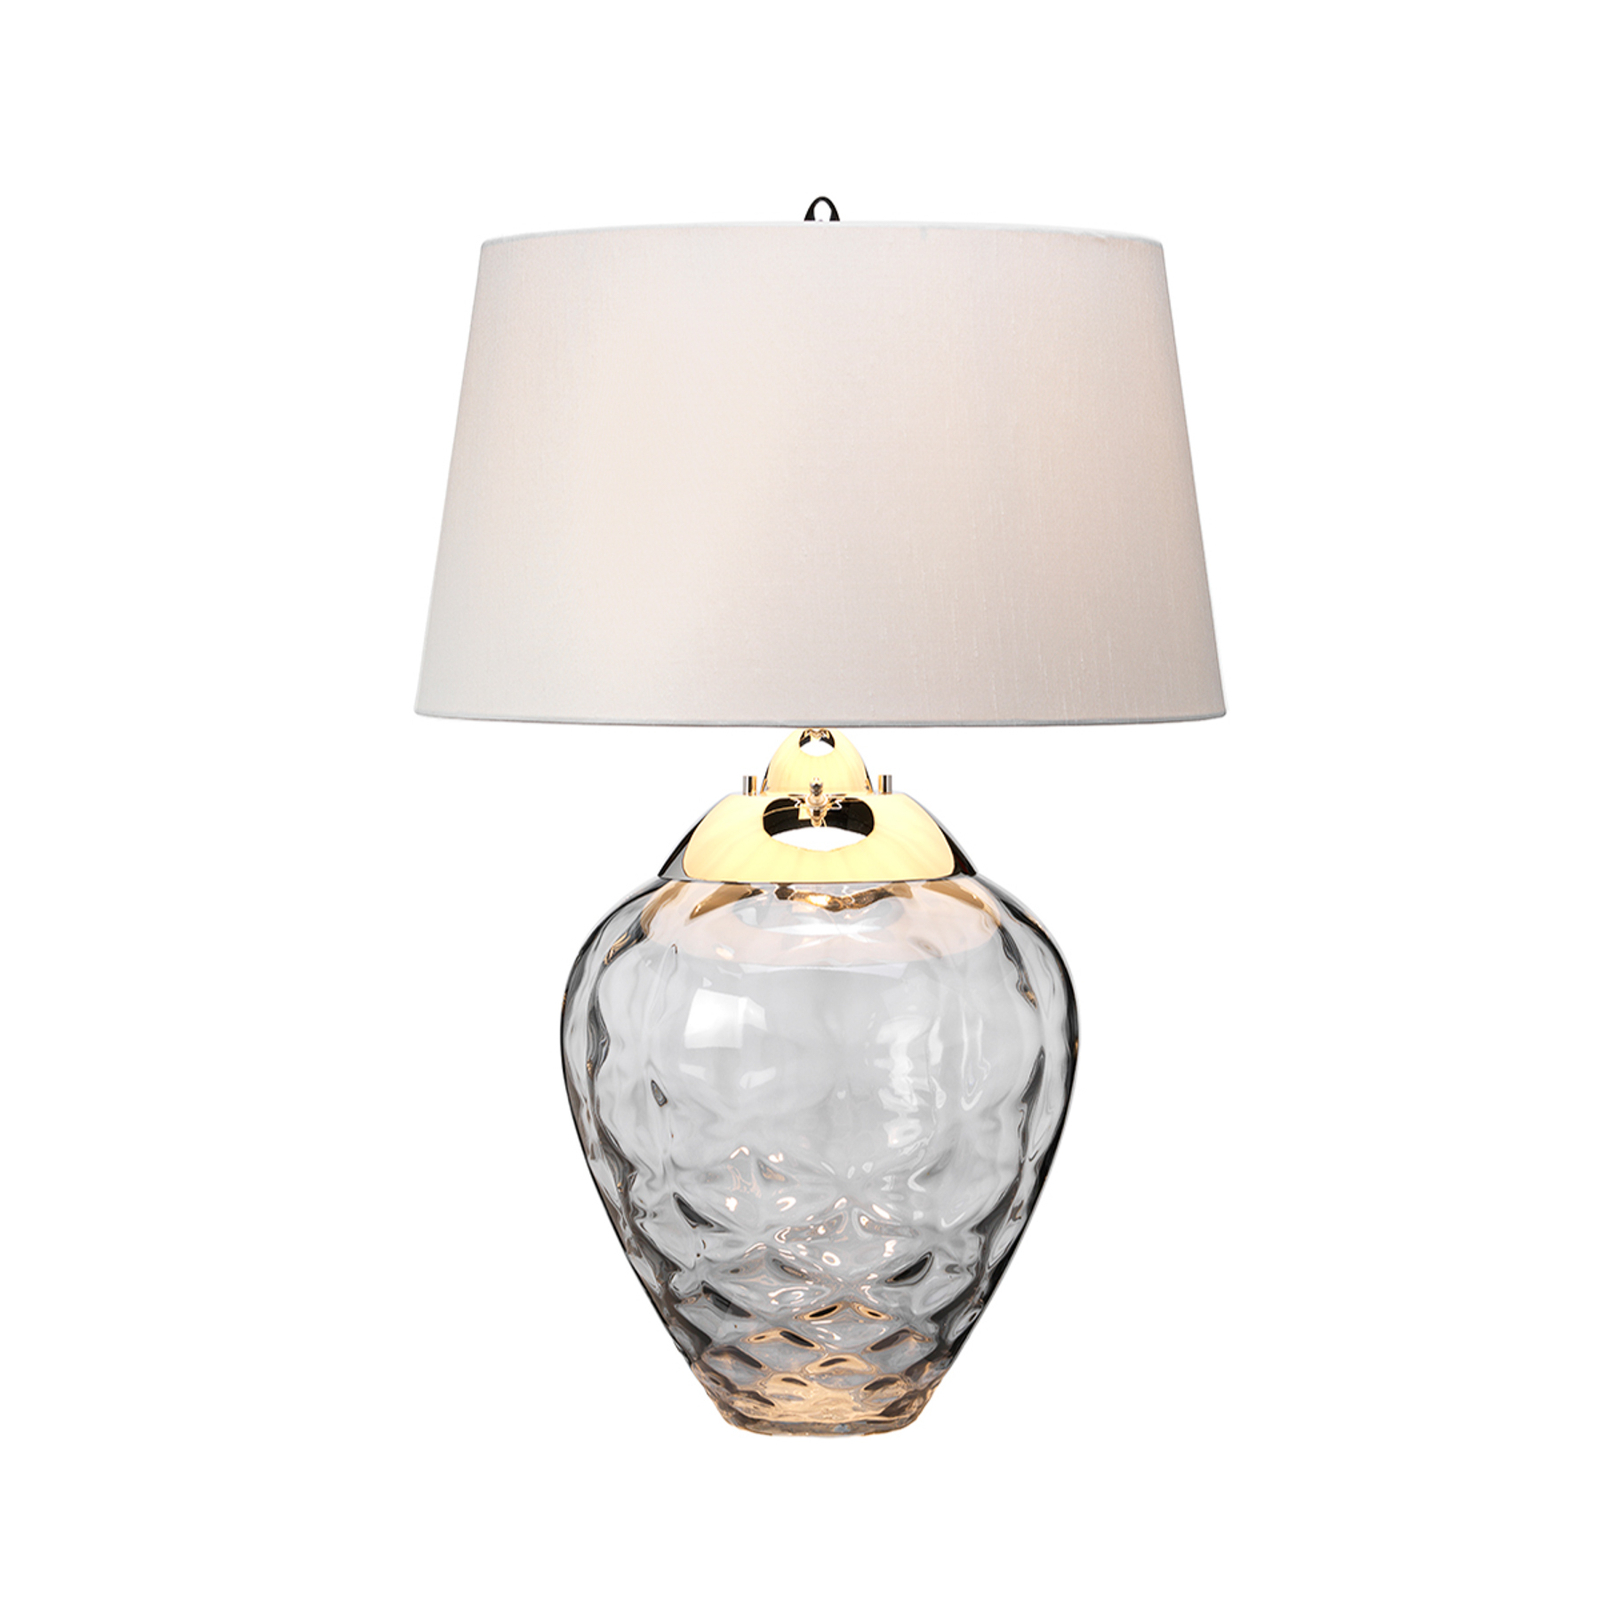 Samara bordlampe, Ø 45,7 cm, grå, stoff, glass, 2 lamper